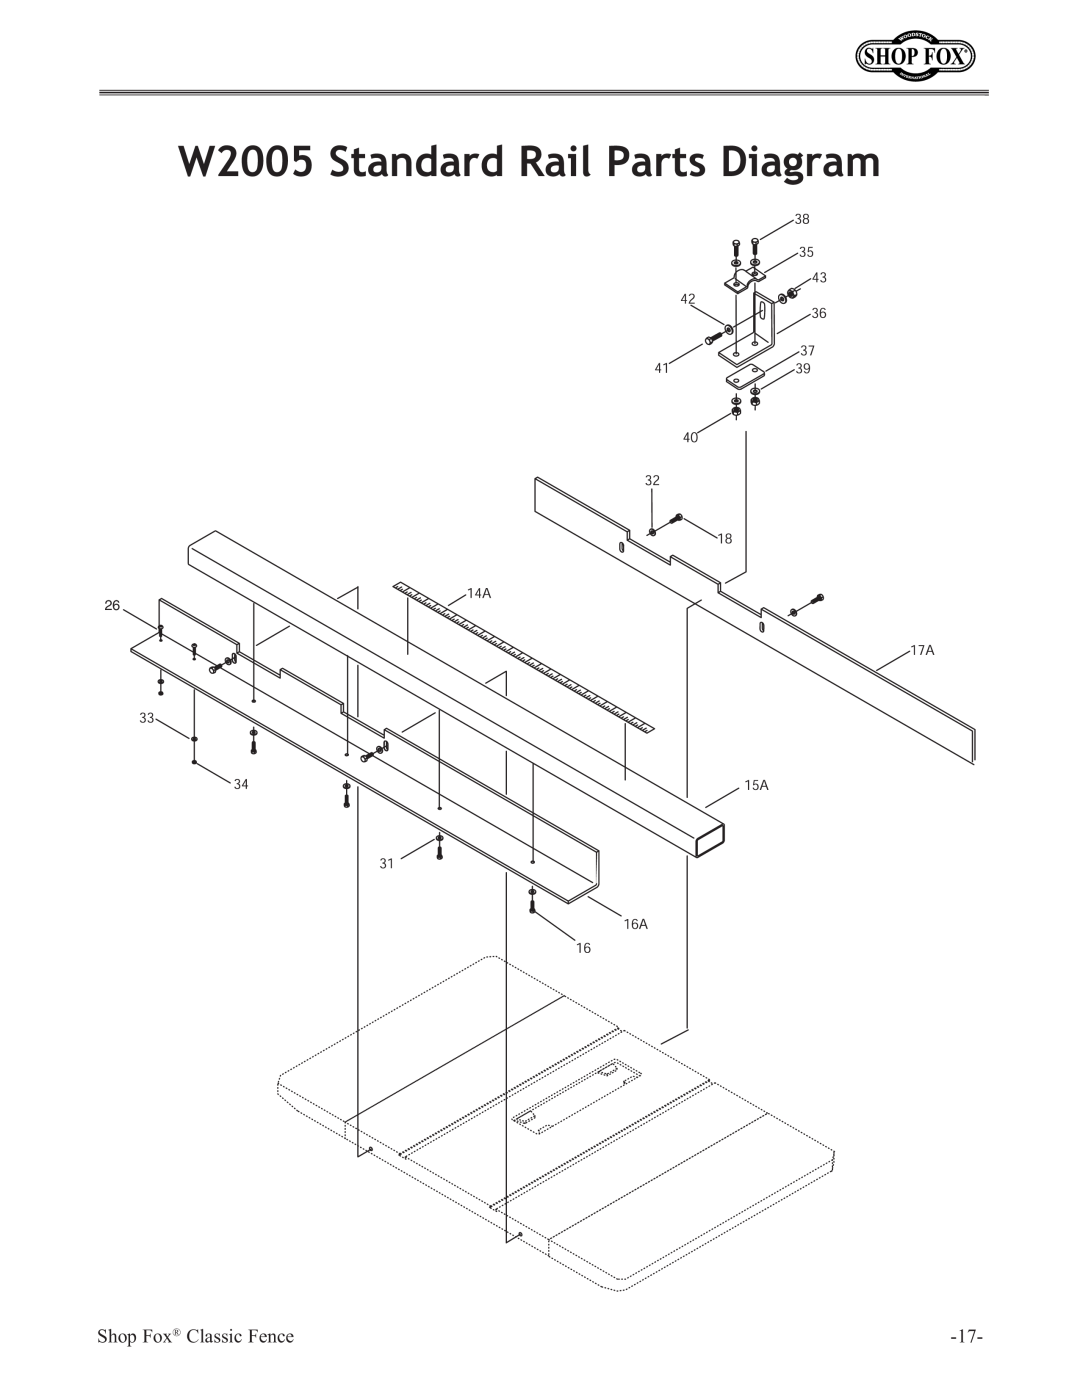 Woodstock W2007, W2006 instruction manual W2005 Standard Rail Parts Diagram, Shop Fox Classic Fence 